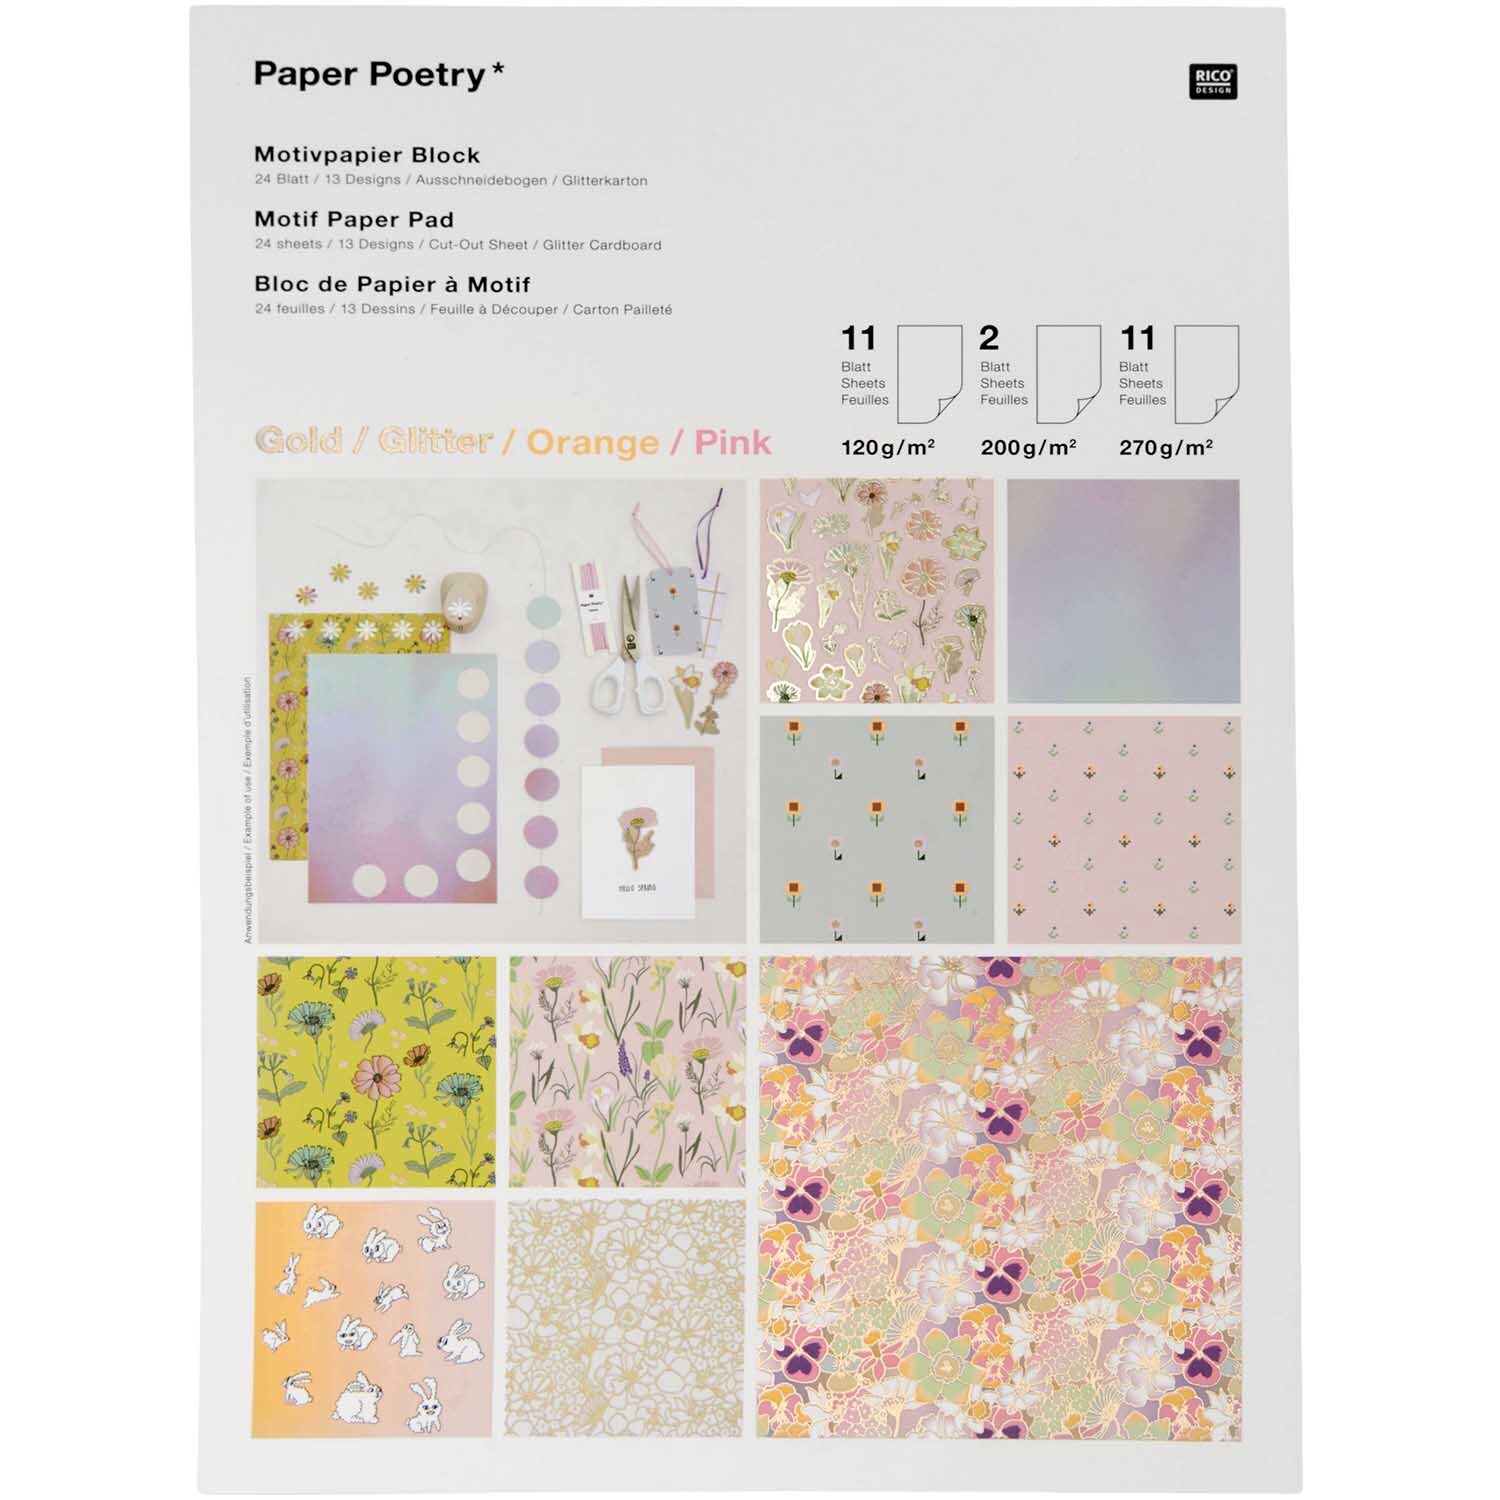 Paper Poetry Motivpapierblock Flower Power